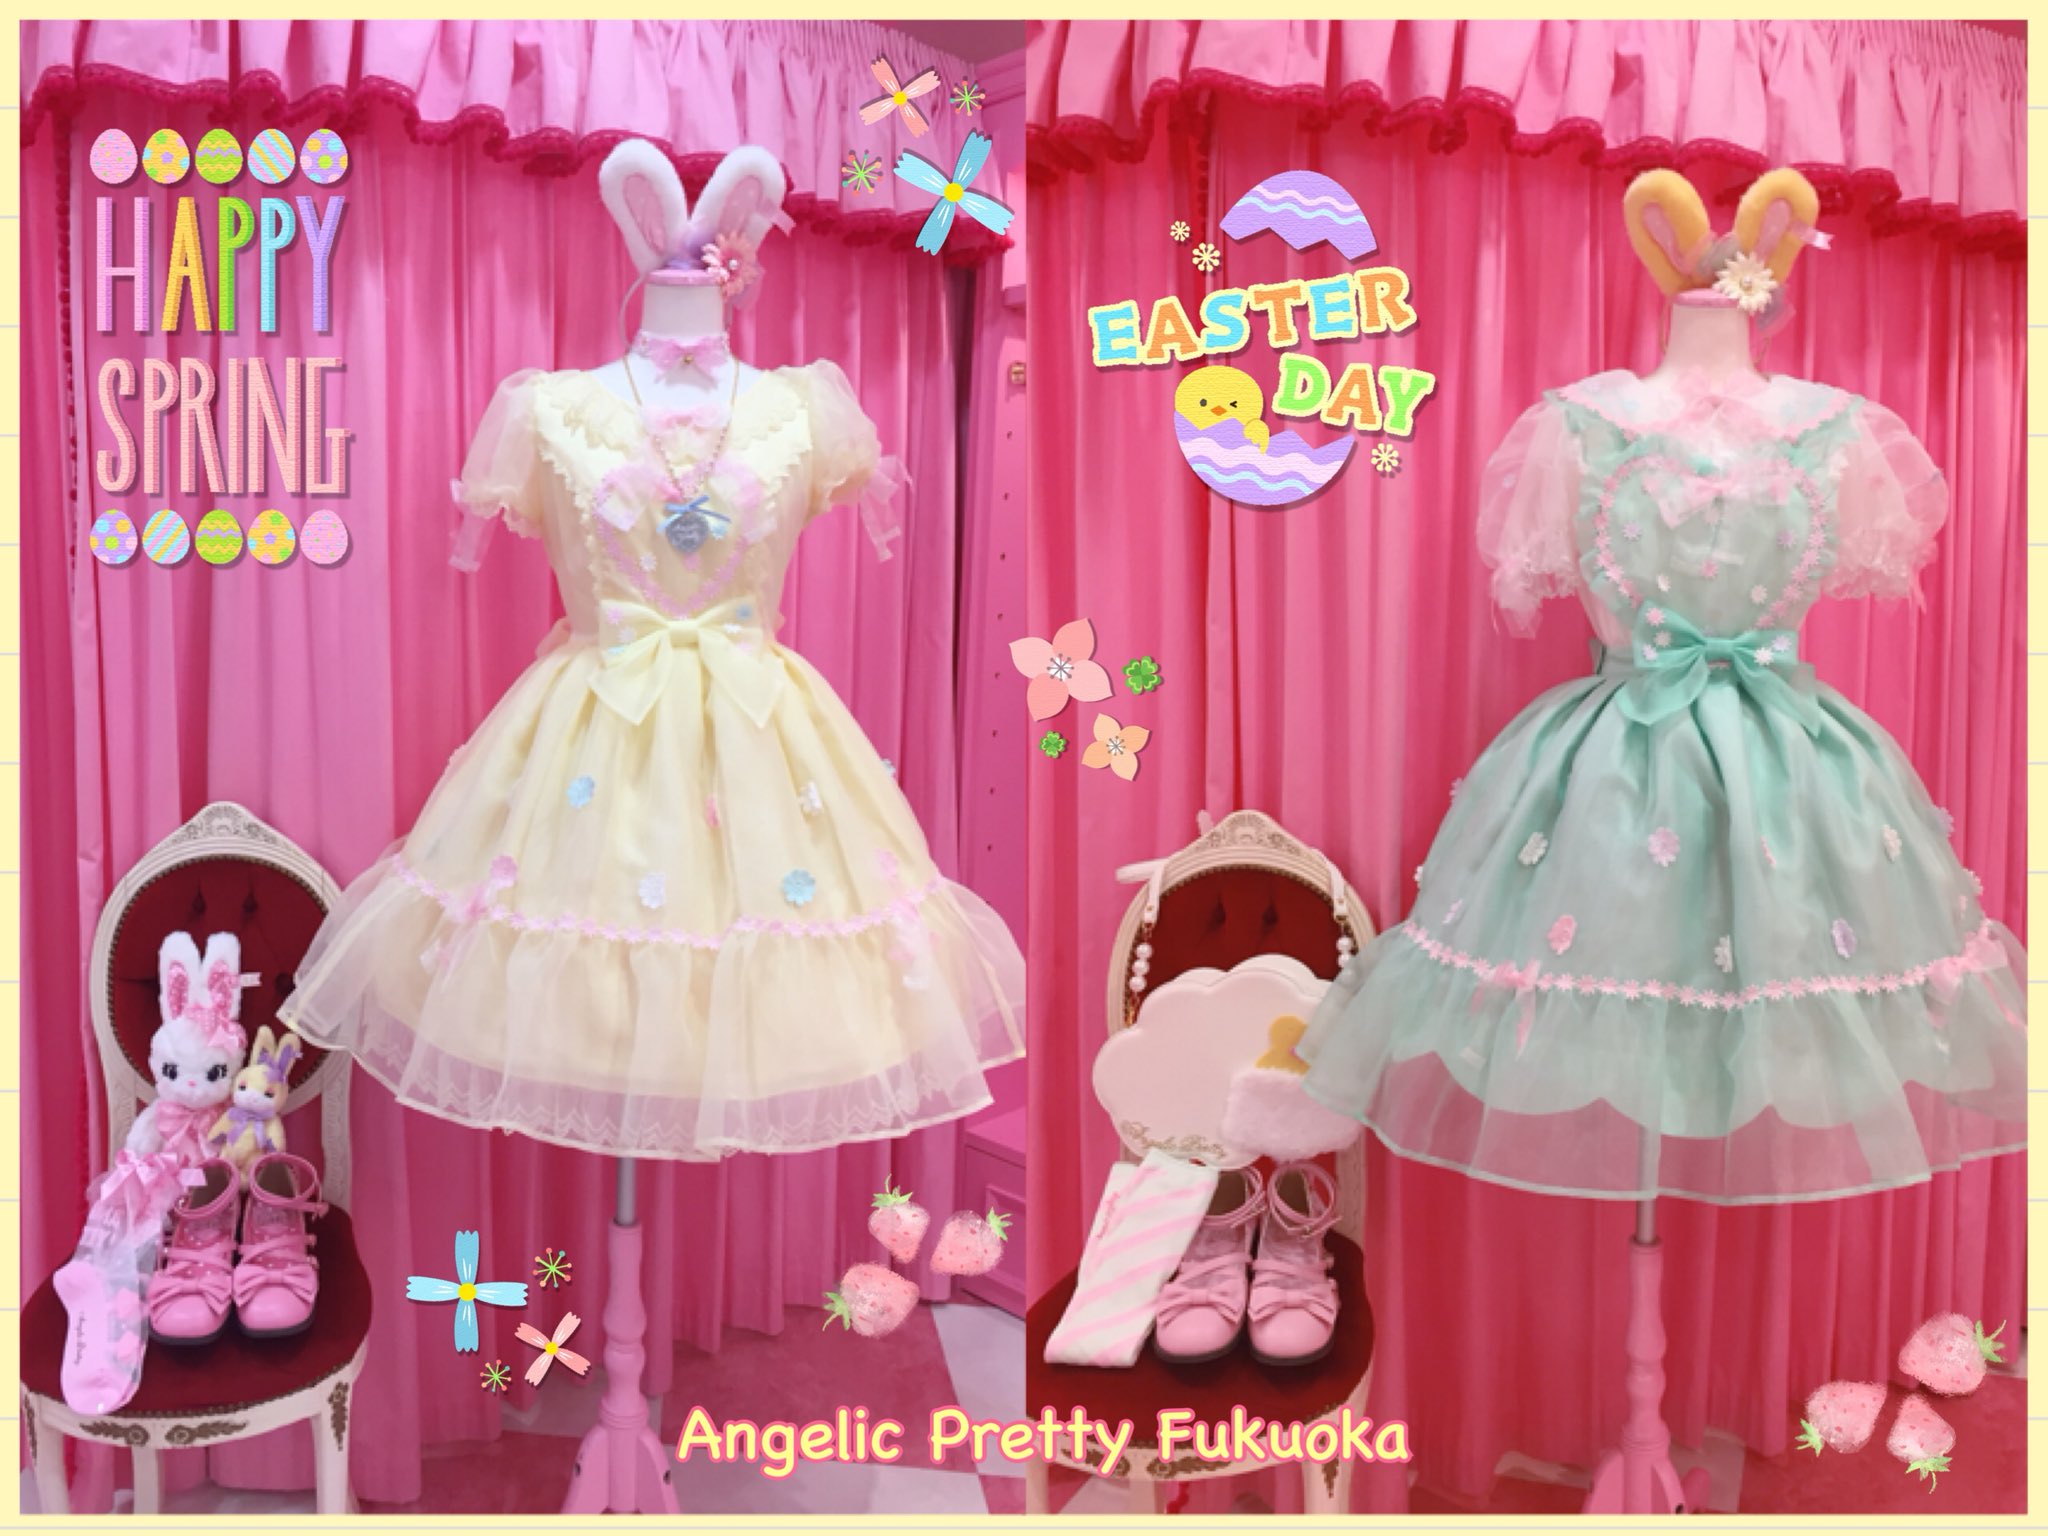 Angelic Pretty福岡店 på Twitter: 